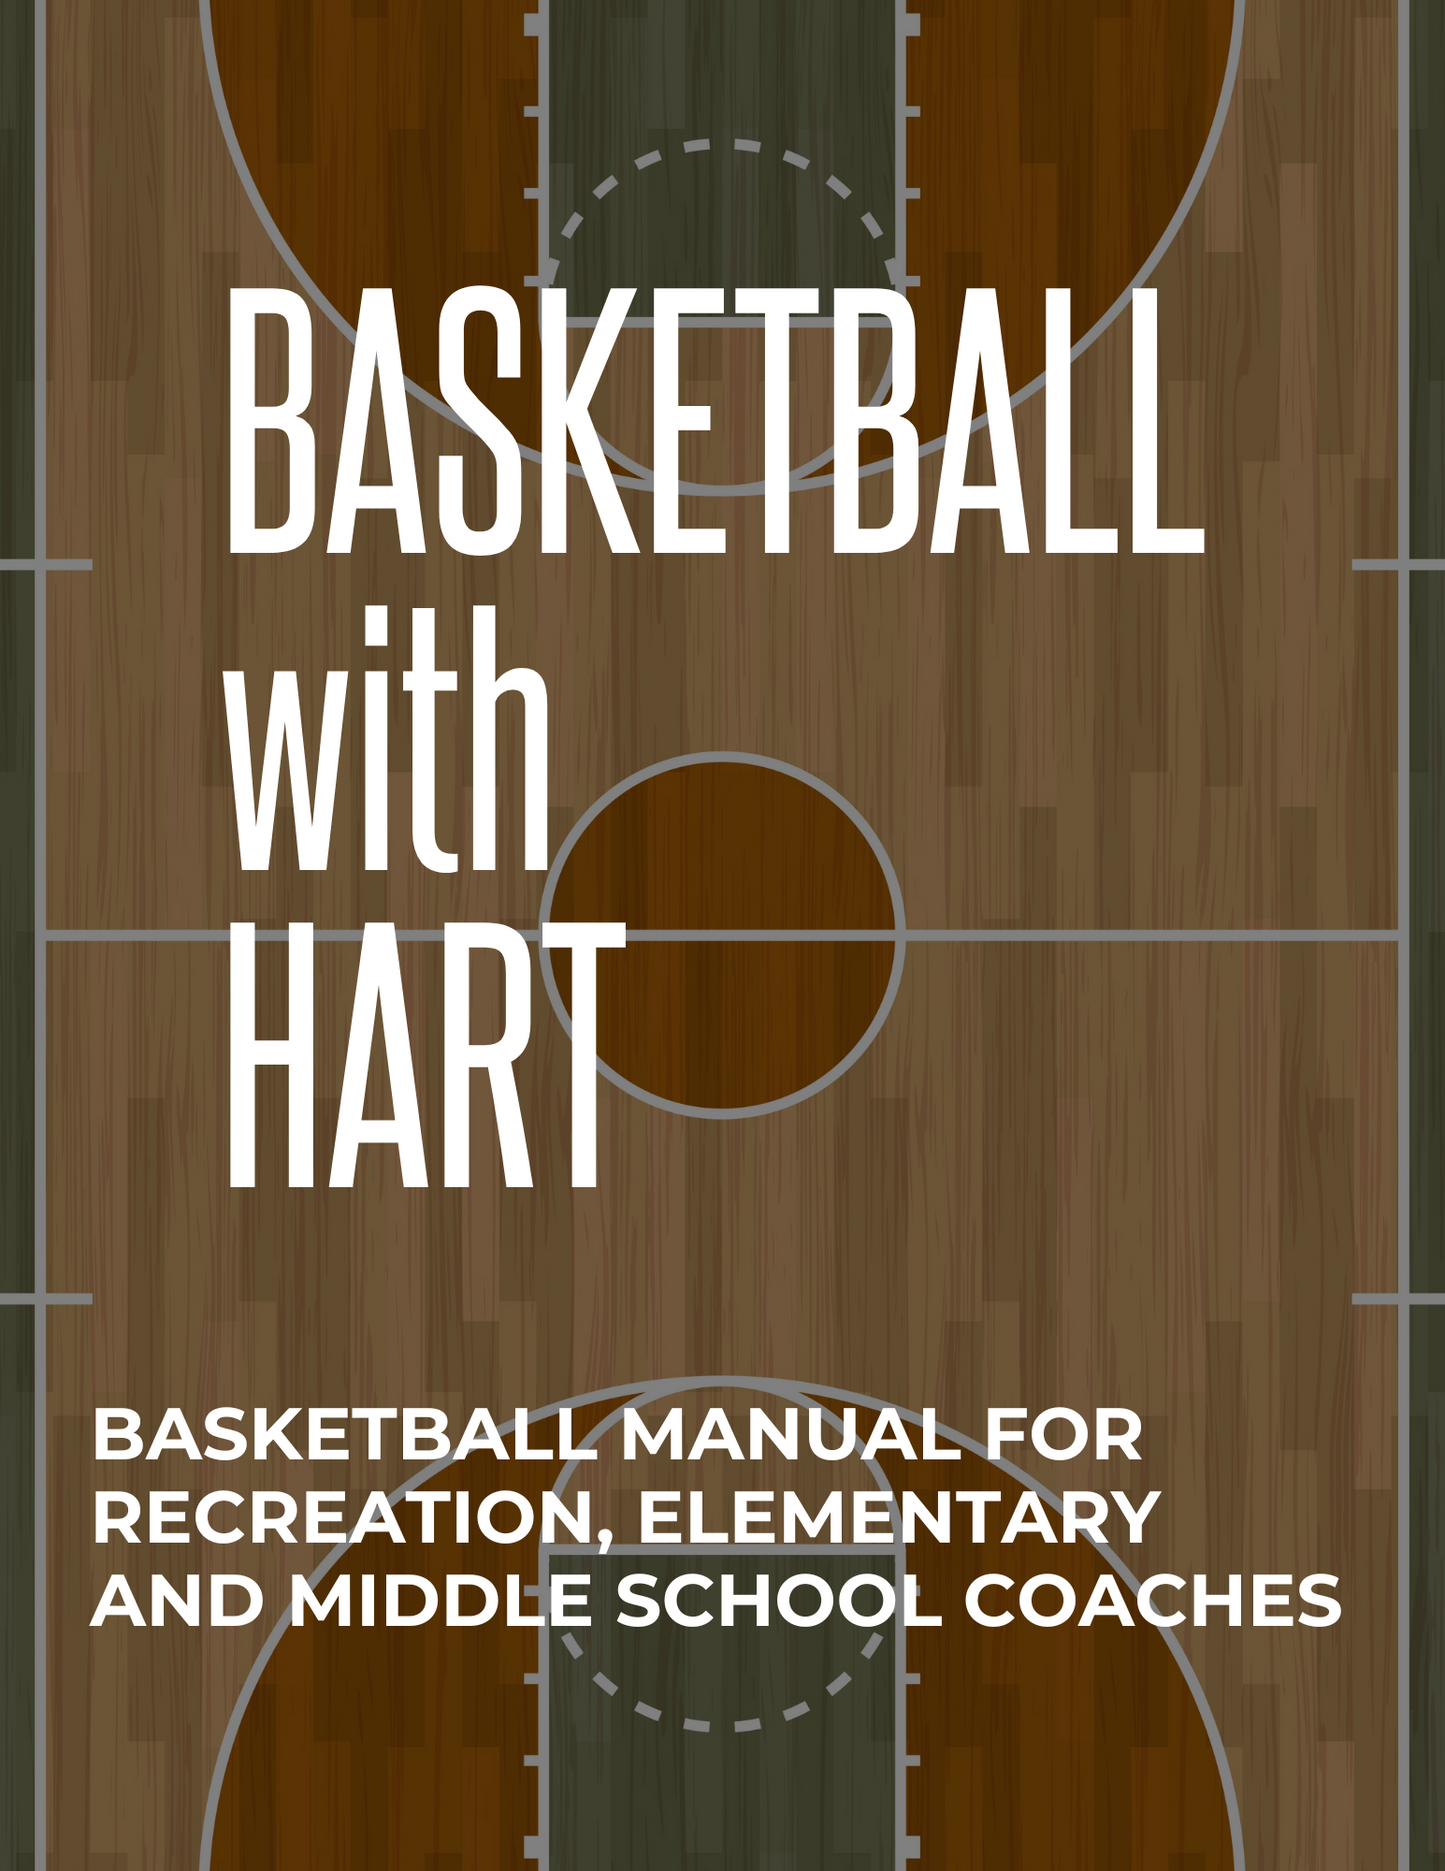 Basketball with HART